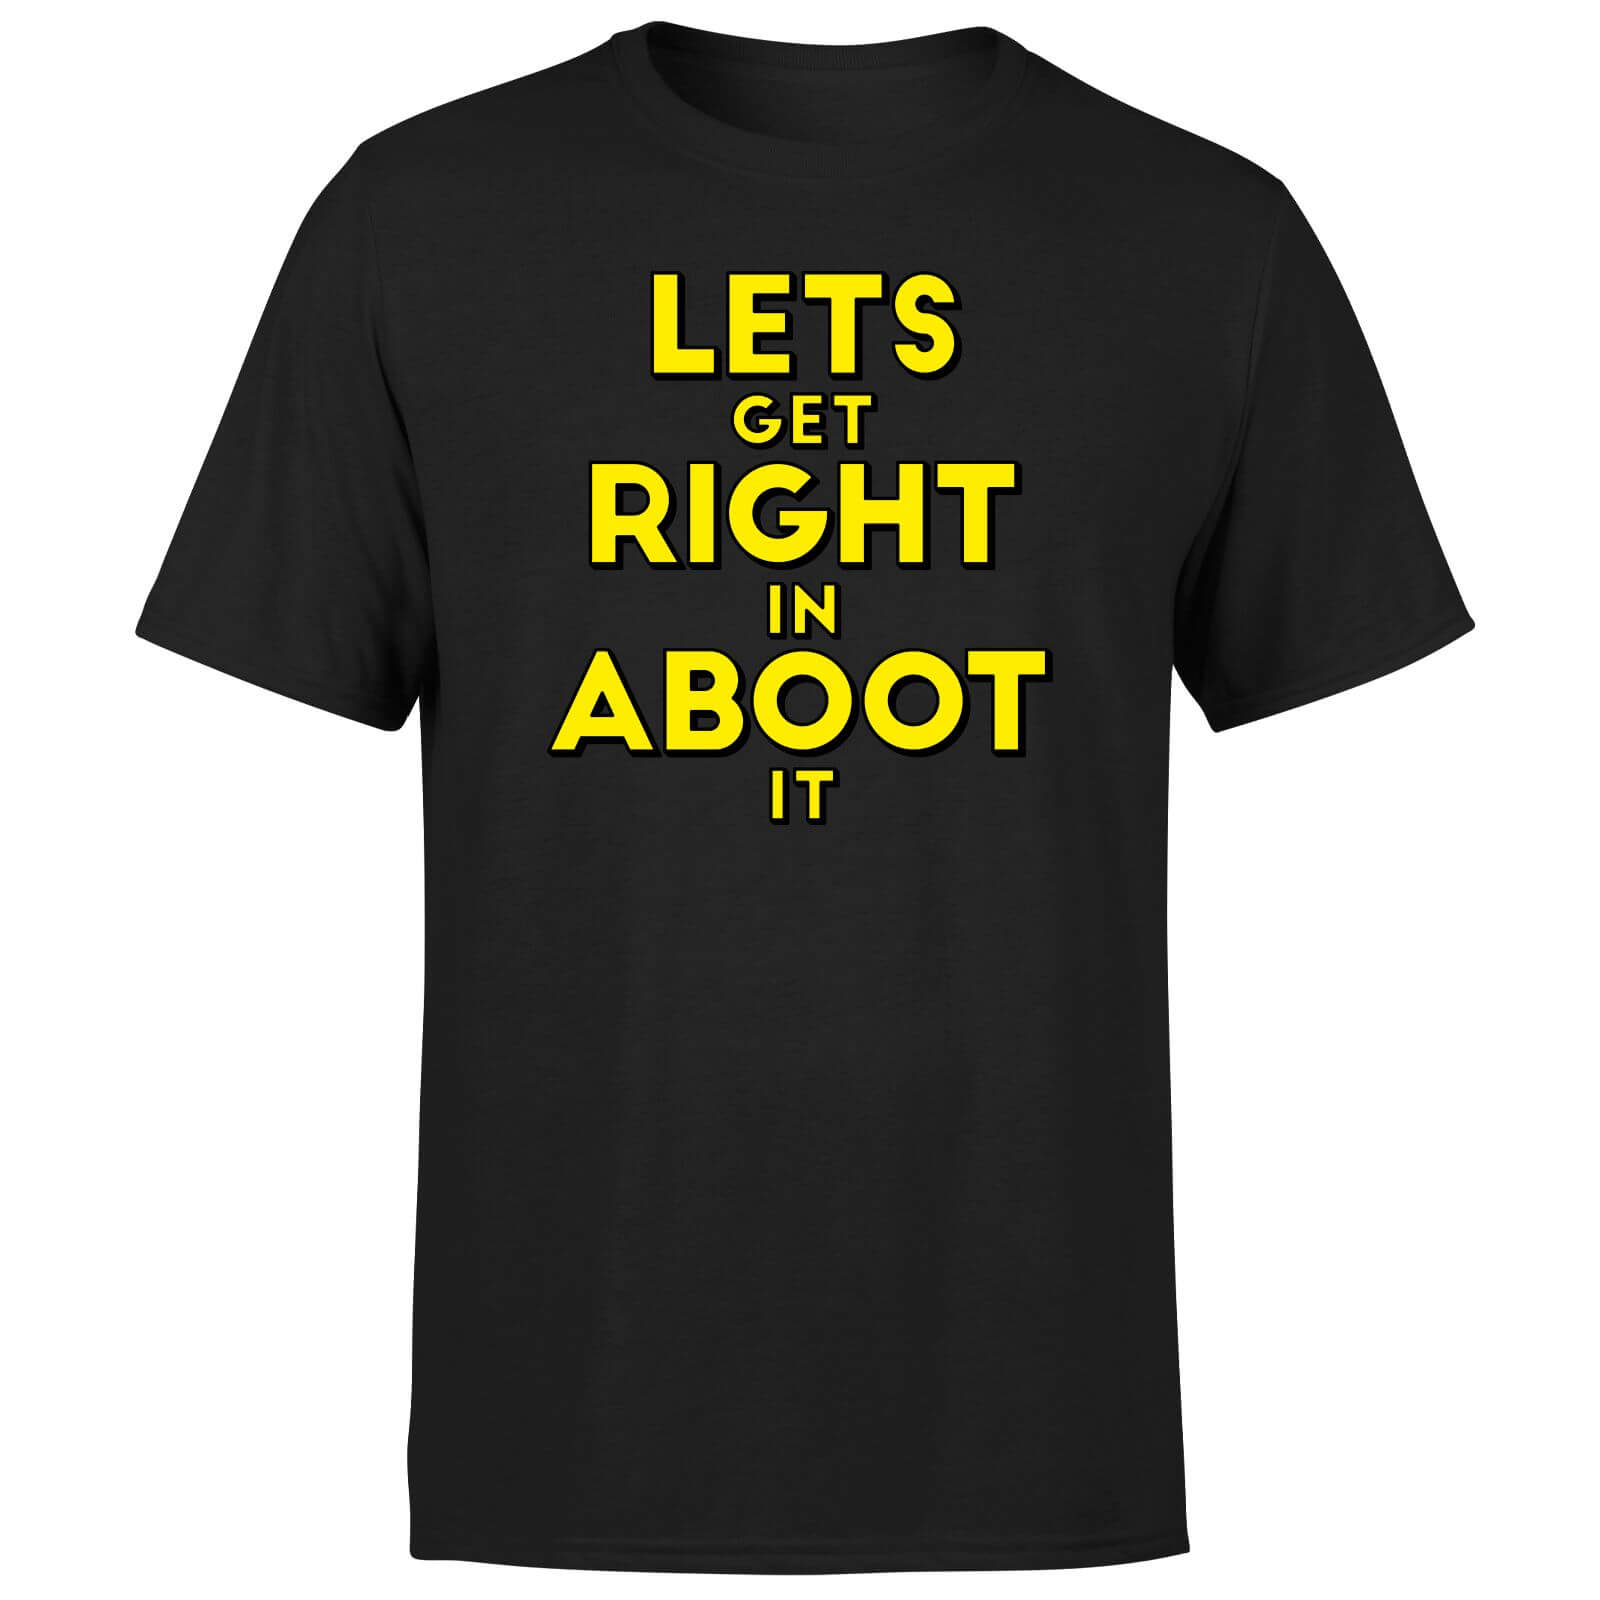 Let's Get Right In Aboot It Men's T-Shirt - Black - 3XL - Black